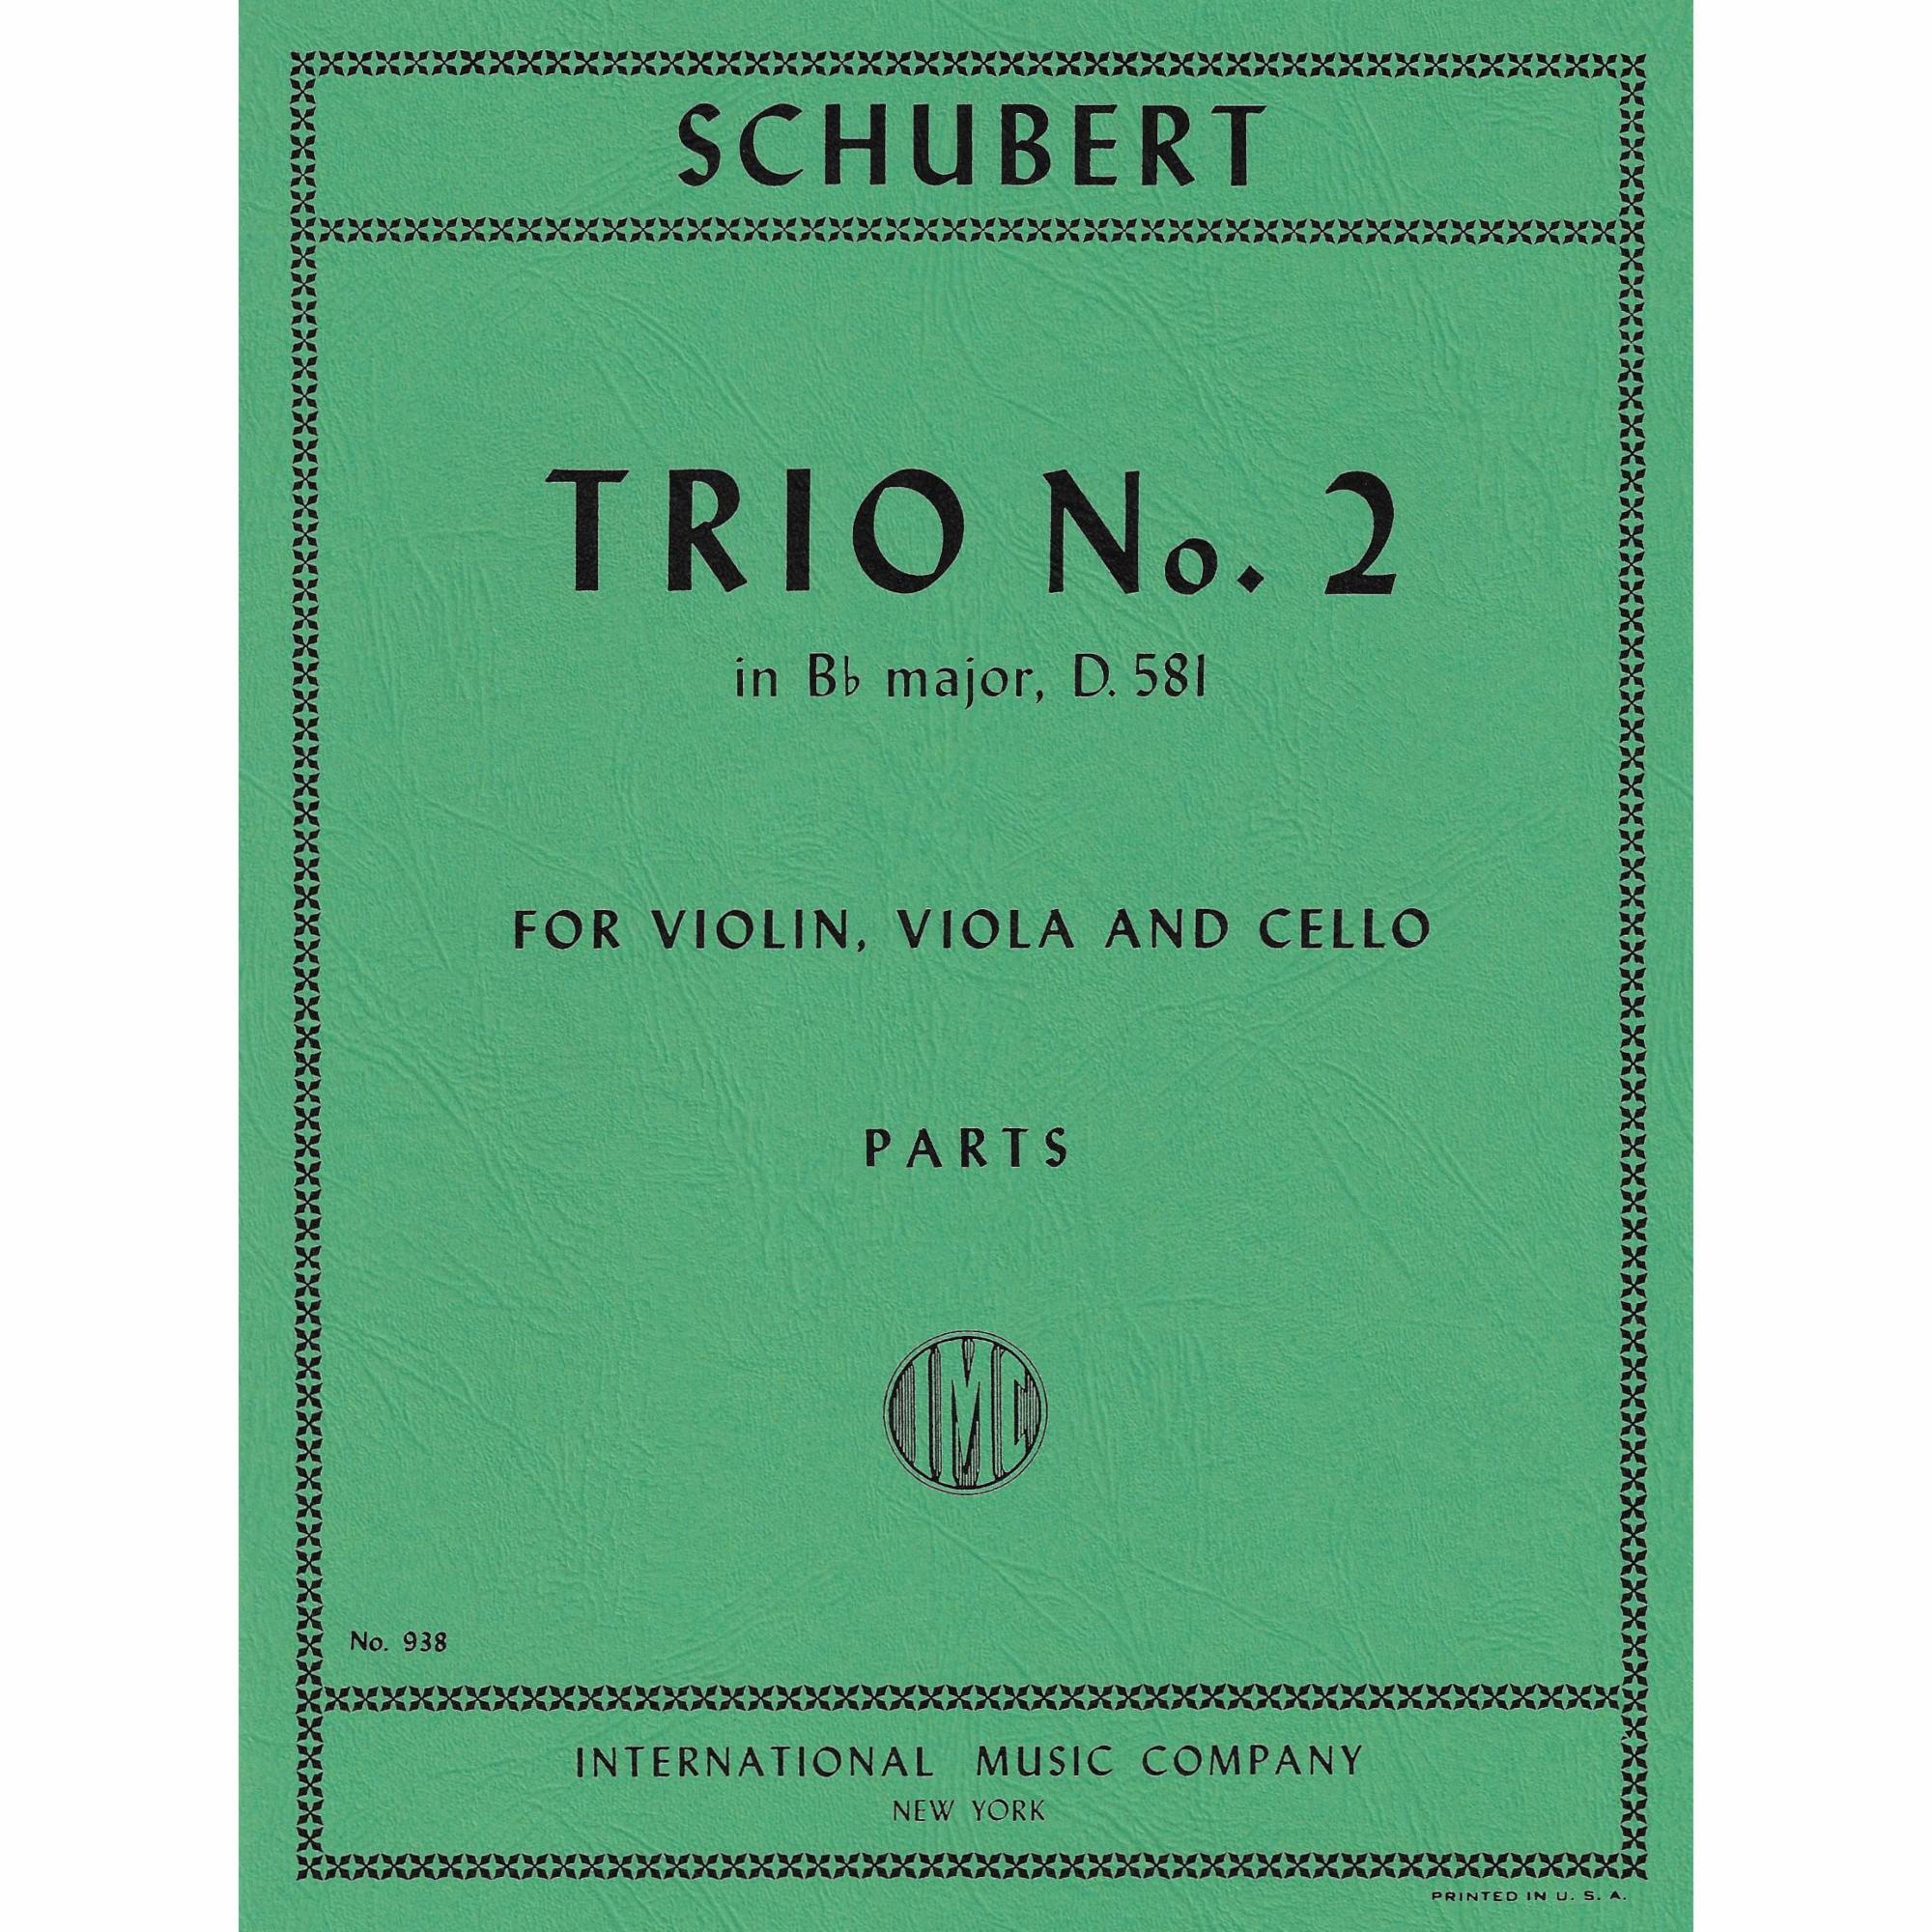 Schubert -- Trio No. 2 in B-flat Major, D. 581 for Violin, Viola, and Cello